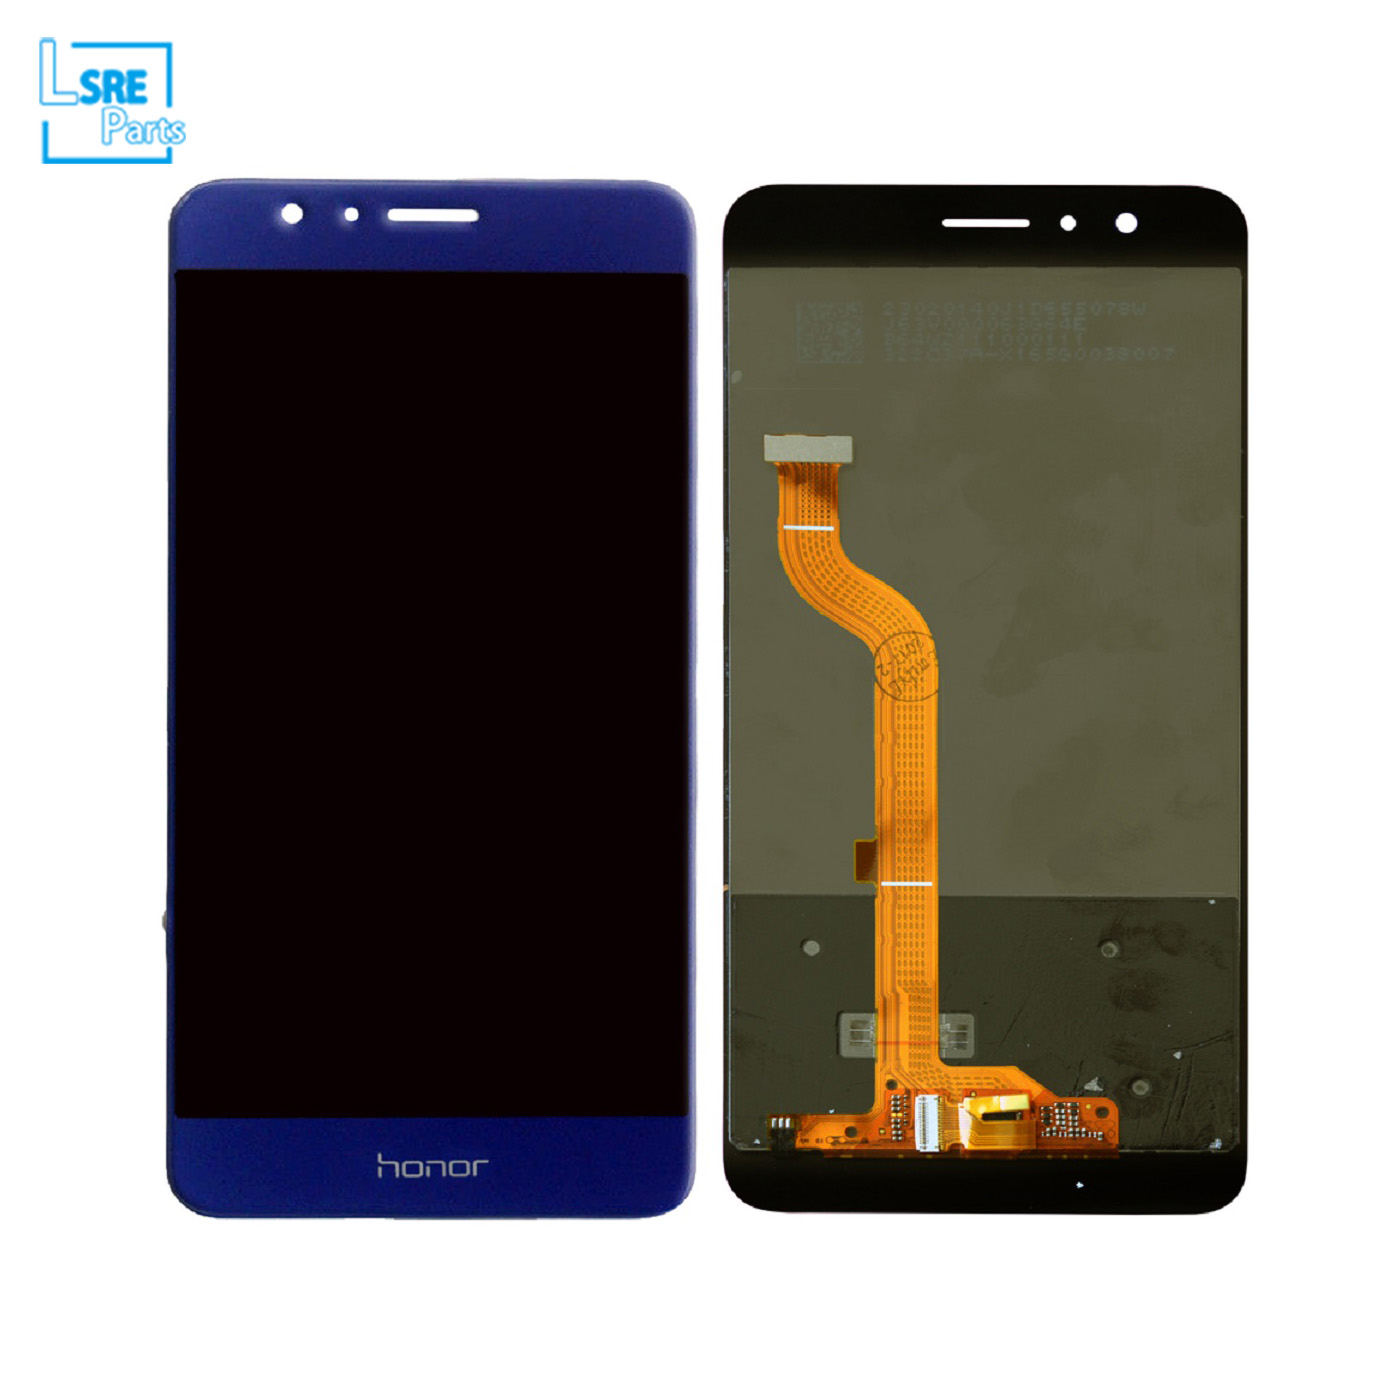 Экран телефона хонор 8. Дисплей для Huawei Honor 7x. Дисплей для Huawei Honor 10x Lite. Дисплей для Huawei Honor 8 (FRD-l09) Blue. Дисплей хонор 9 Lite дисплей.